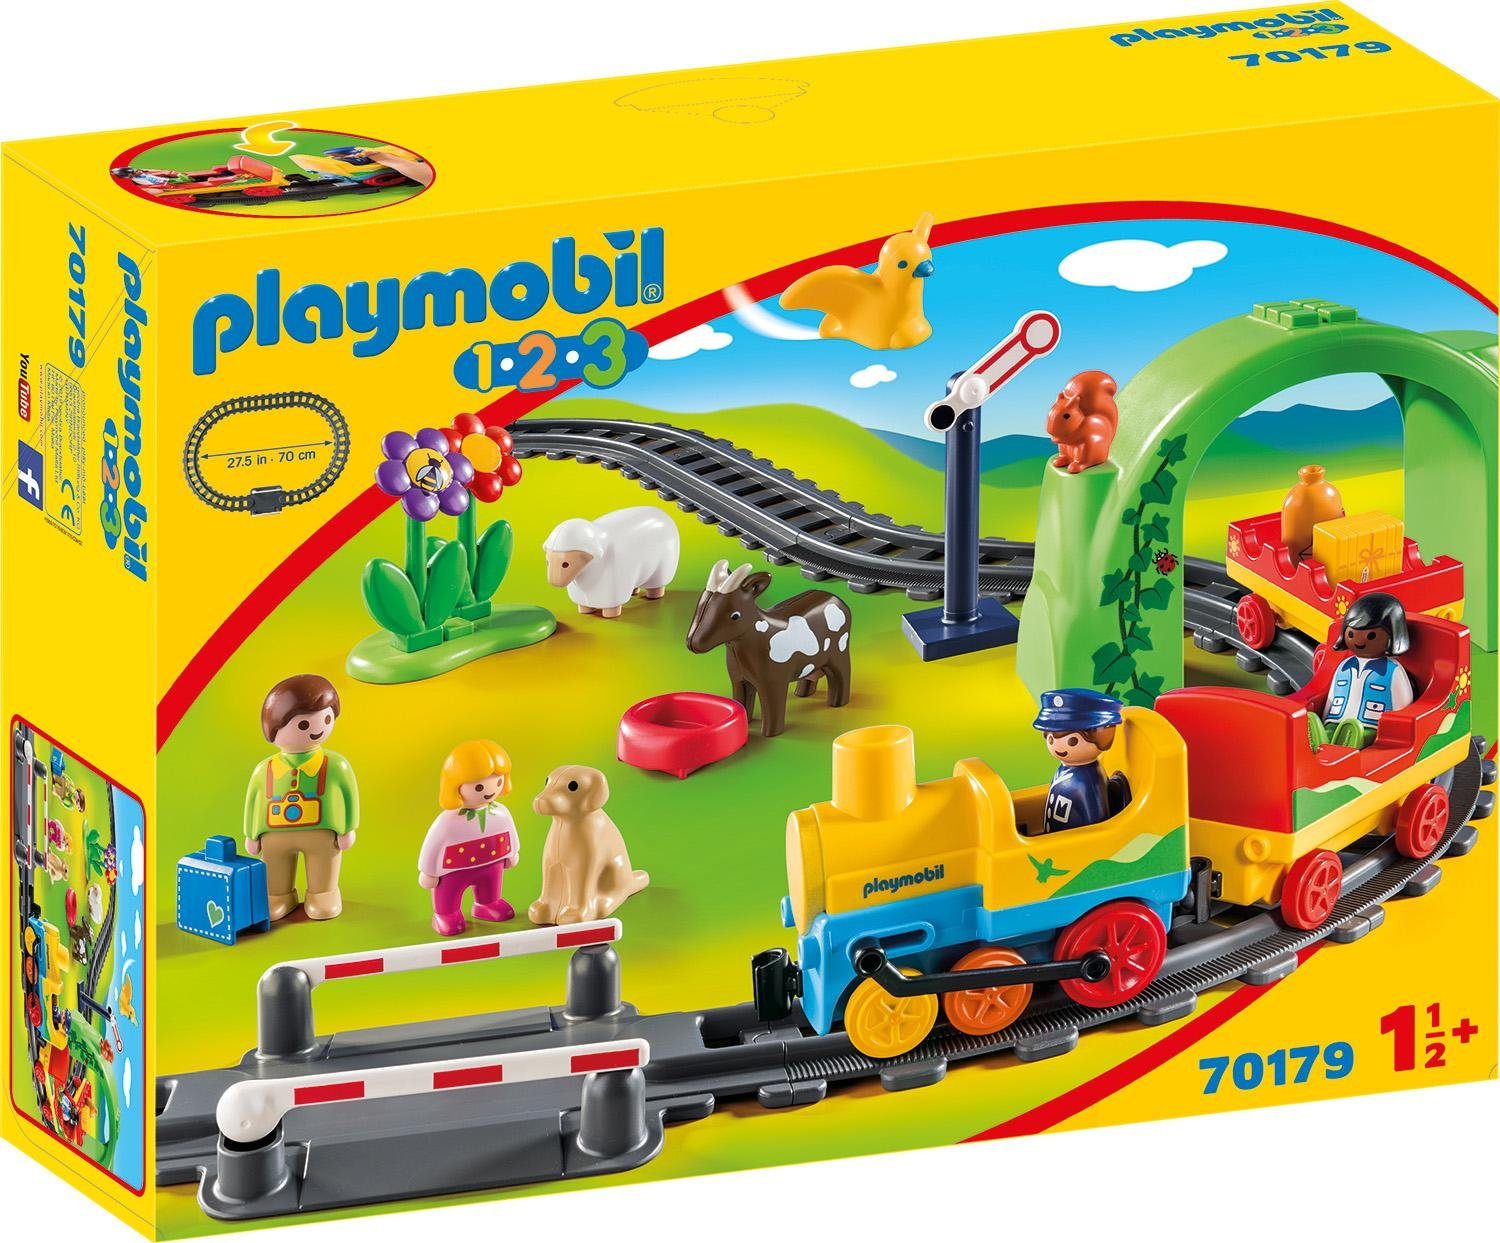 Playmobil® Konstruktions-Spielset Meine erste Eisenbahn (70179), Playmobil 1-2-3, Made in Europe